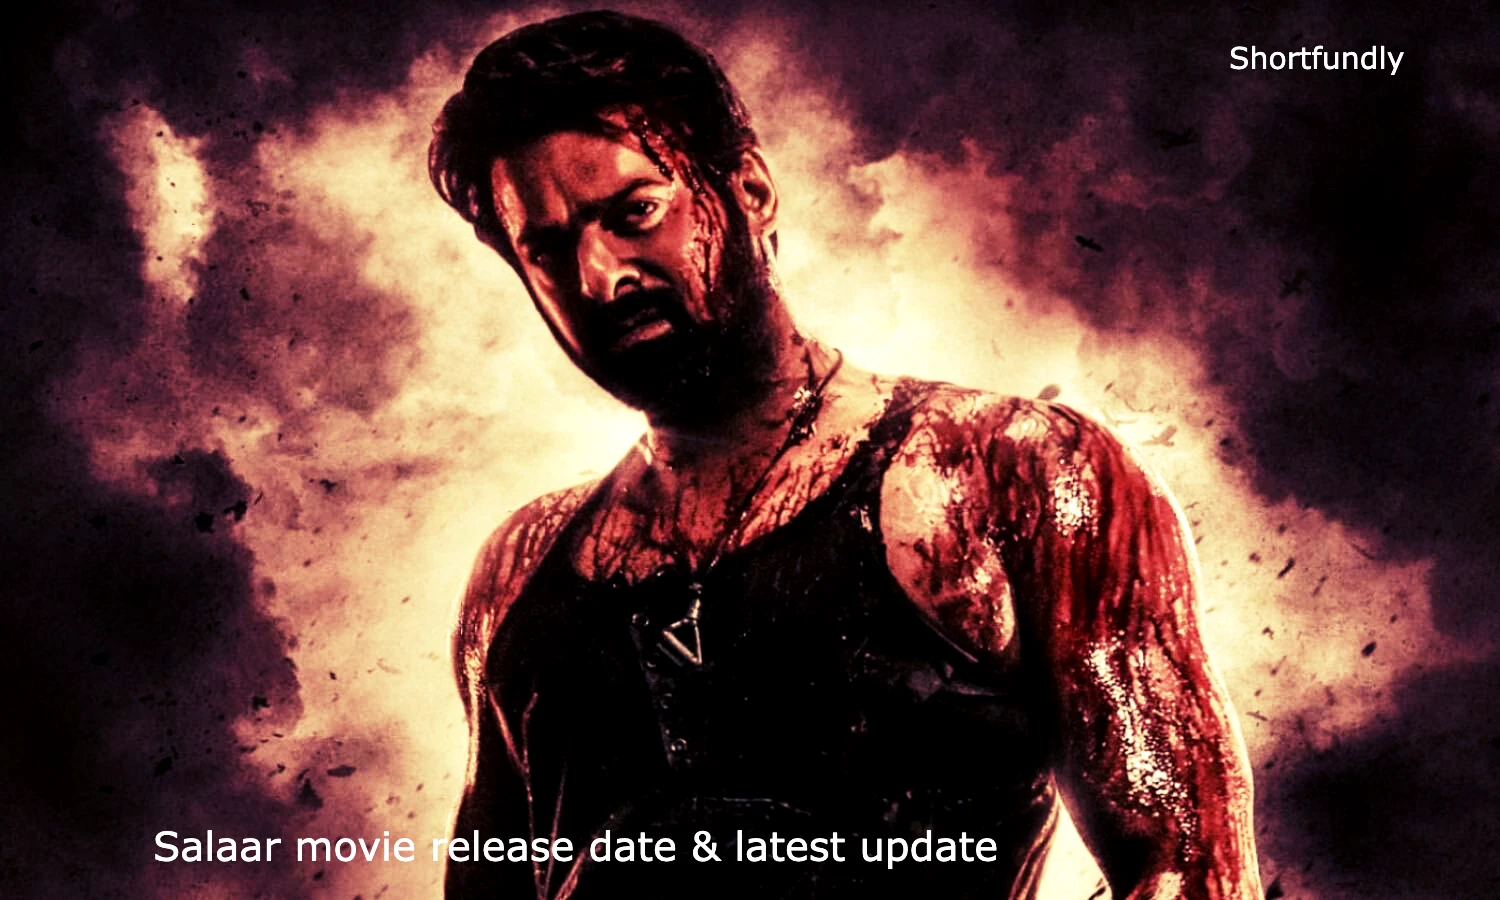 Salaar movie release date & latest update